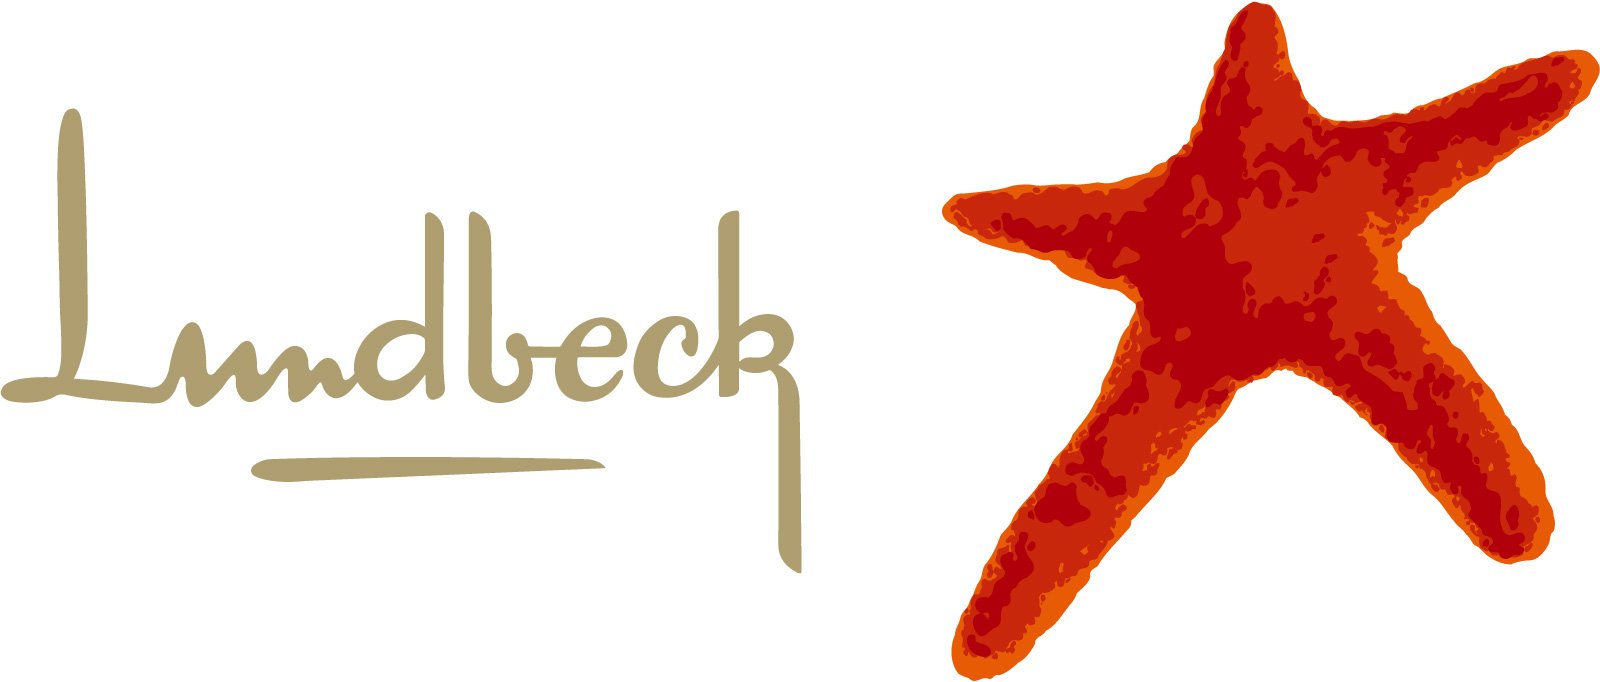 Lundbeck_logo.jpg